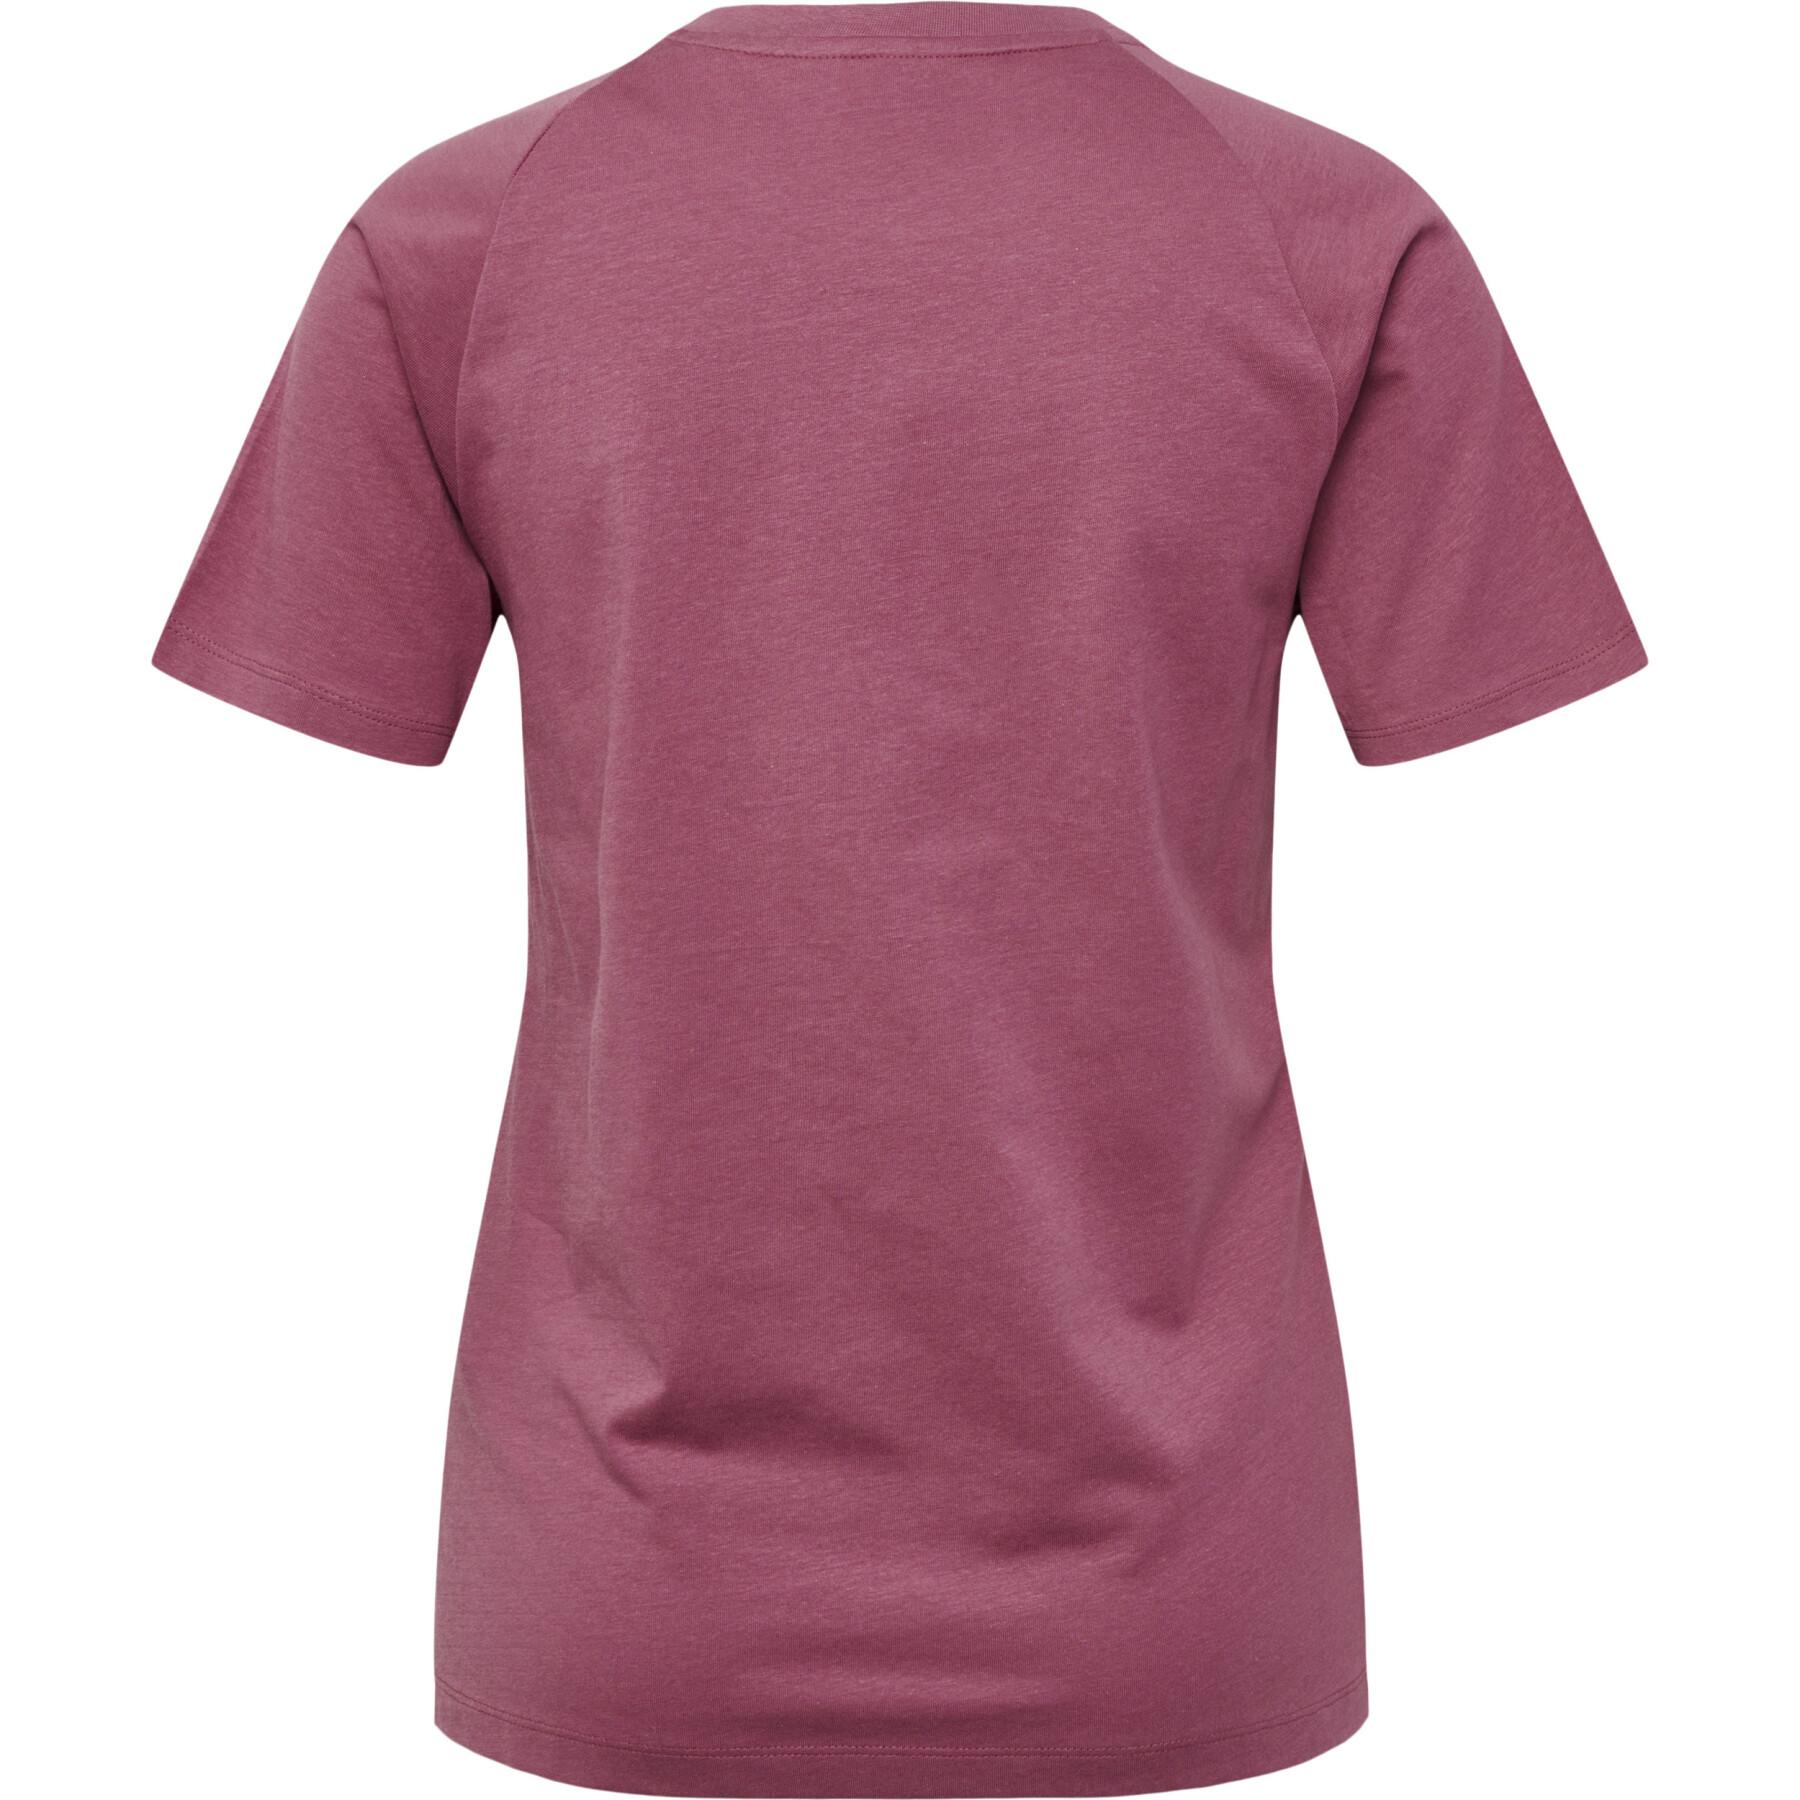 Women's T-shirt Hummel Noni 2.0 - T-shirts & Tank Tops - Clothing